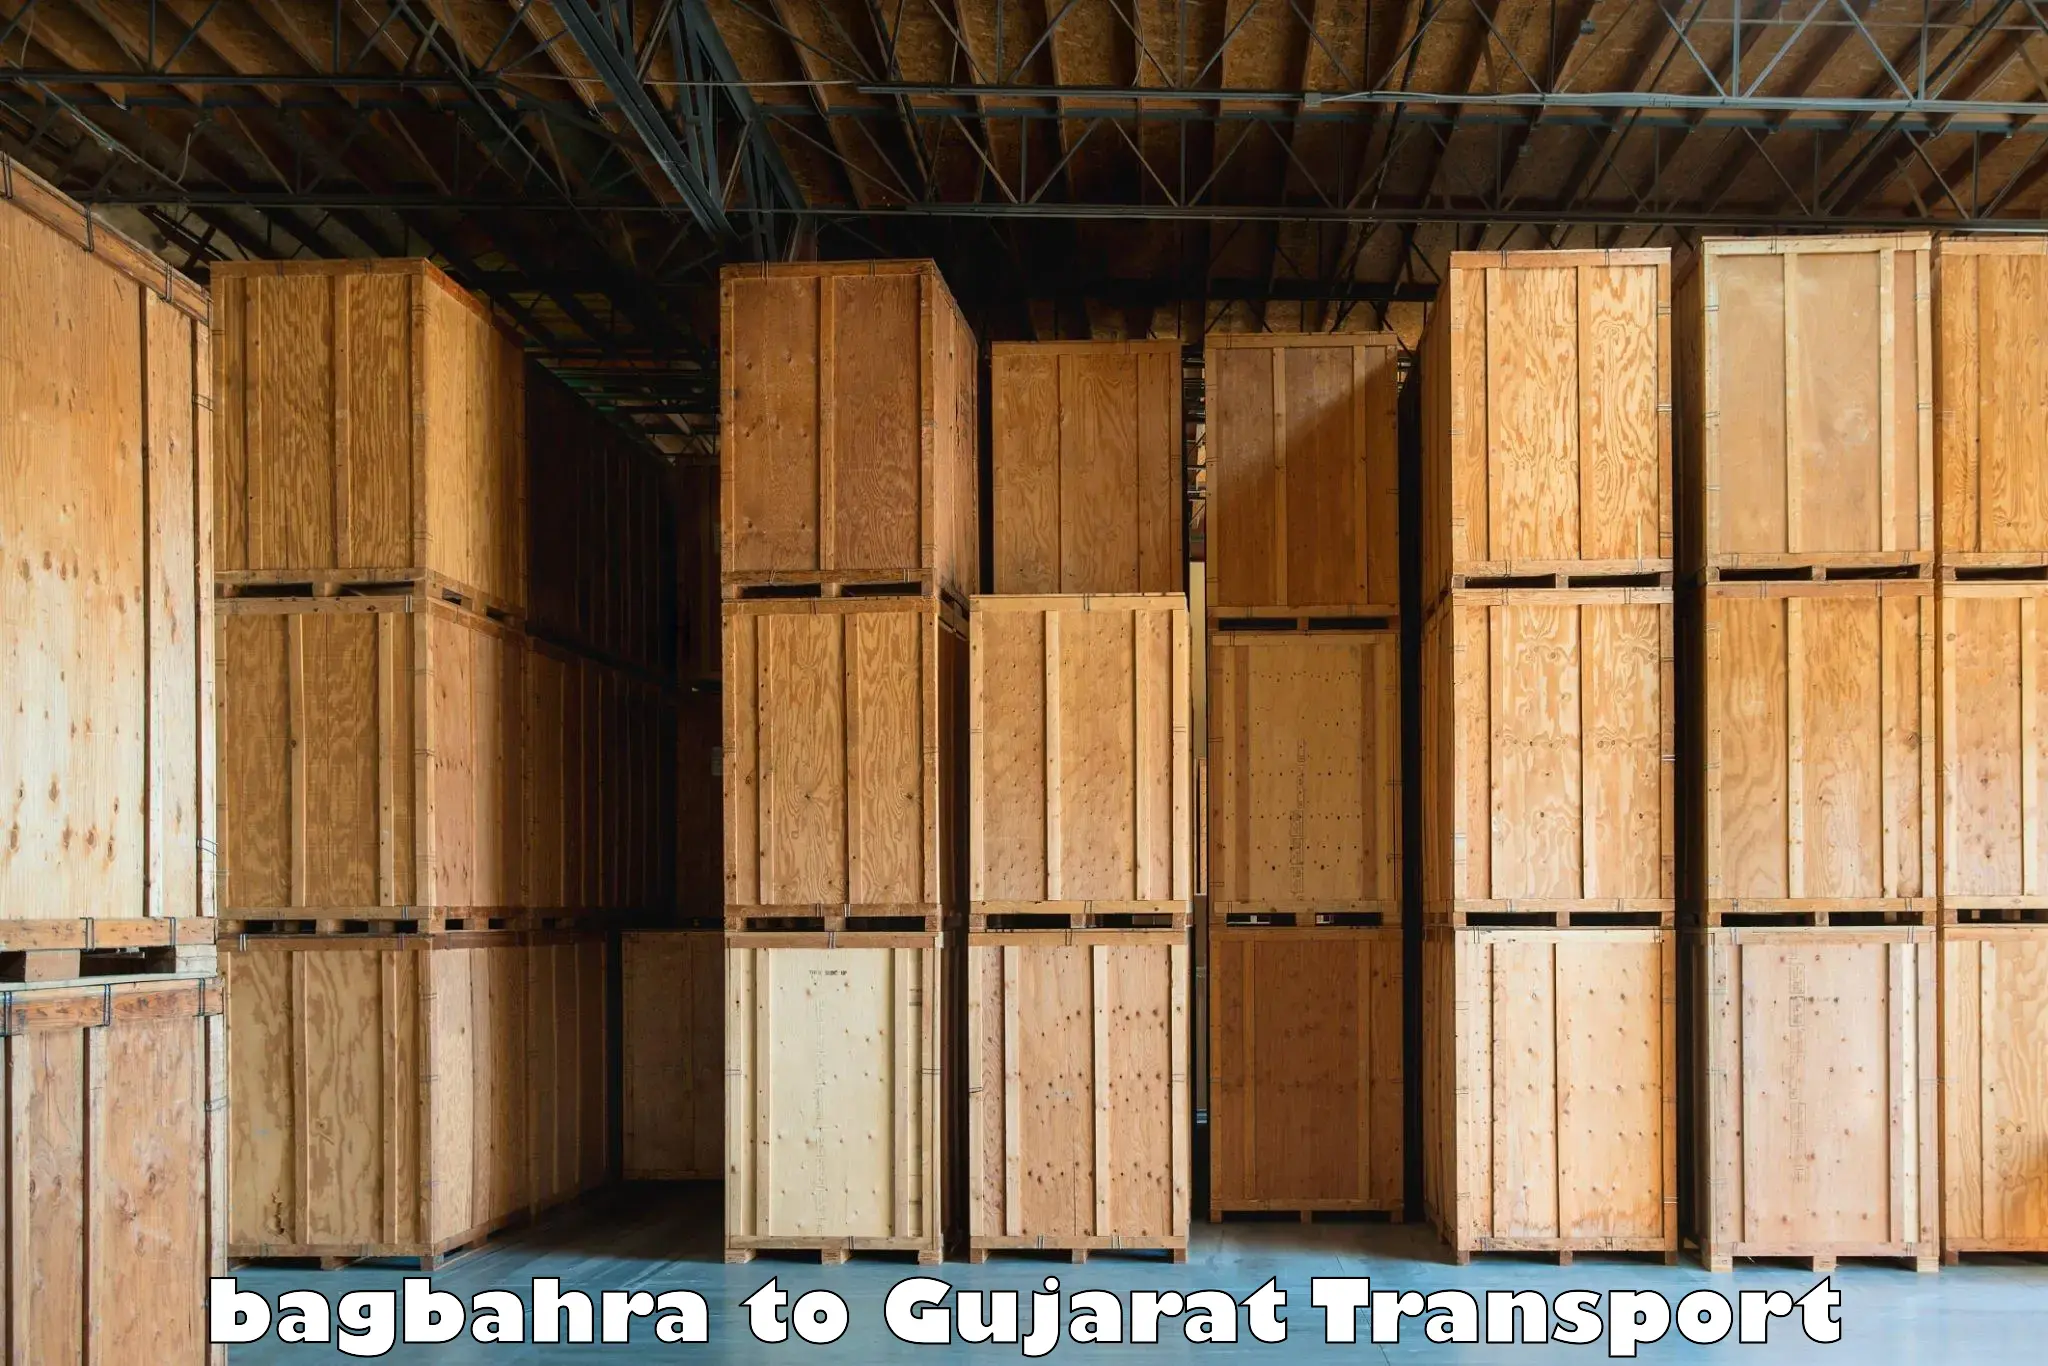 Daily parcel service transport in bagbahra to Narmada Gujarat